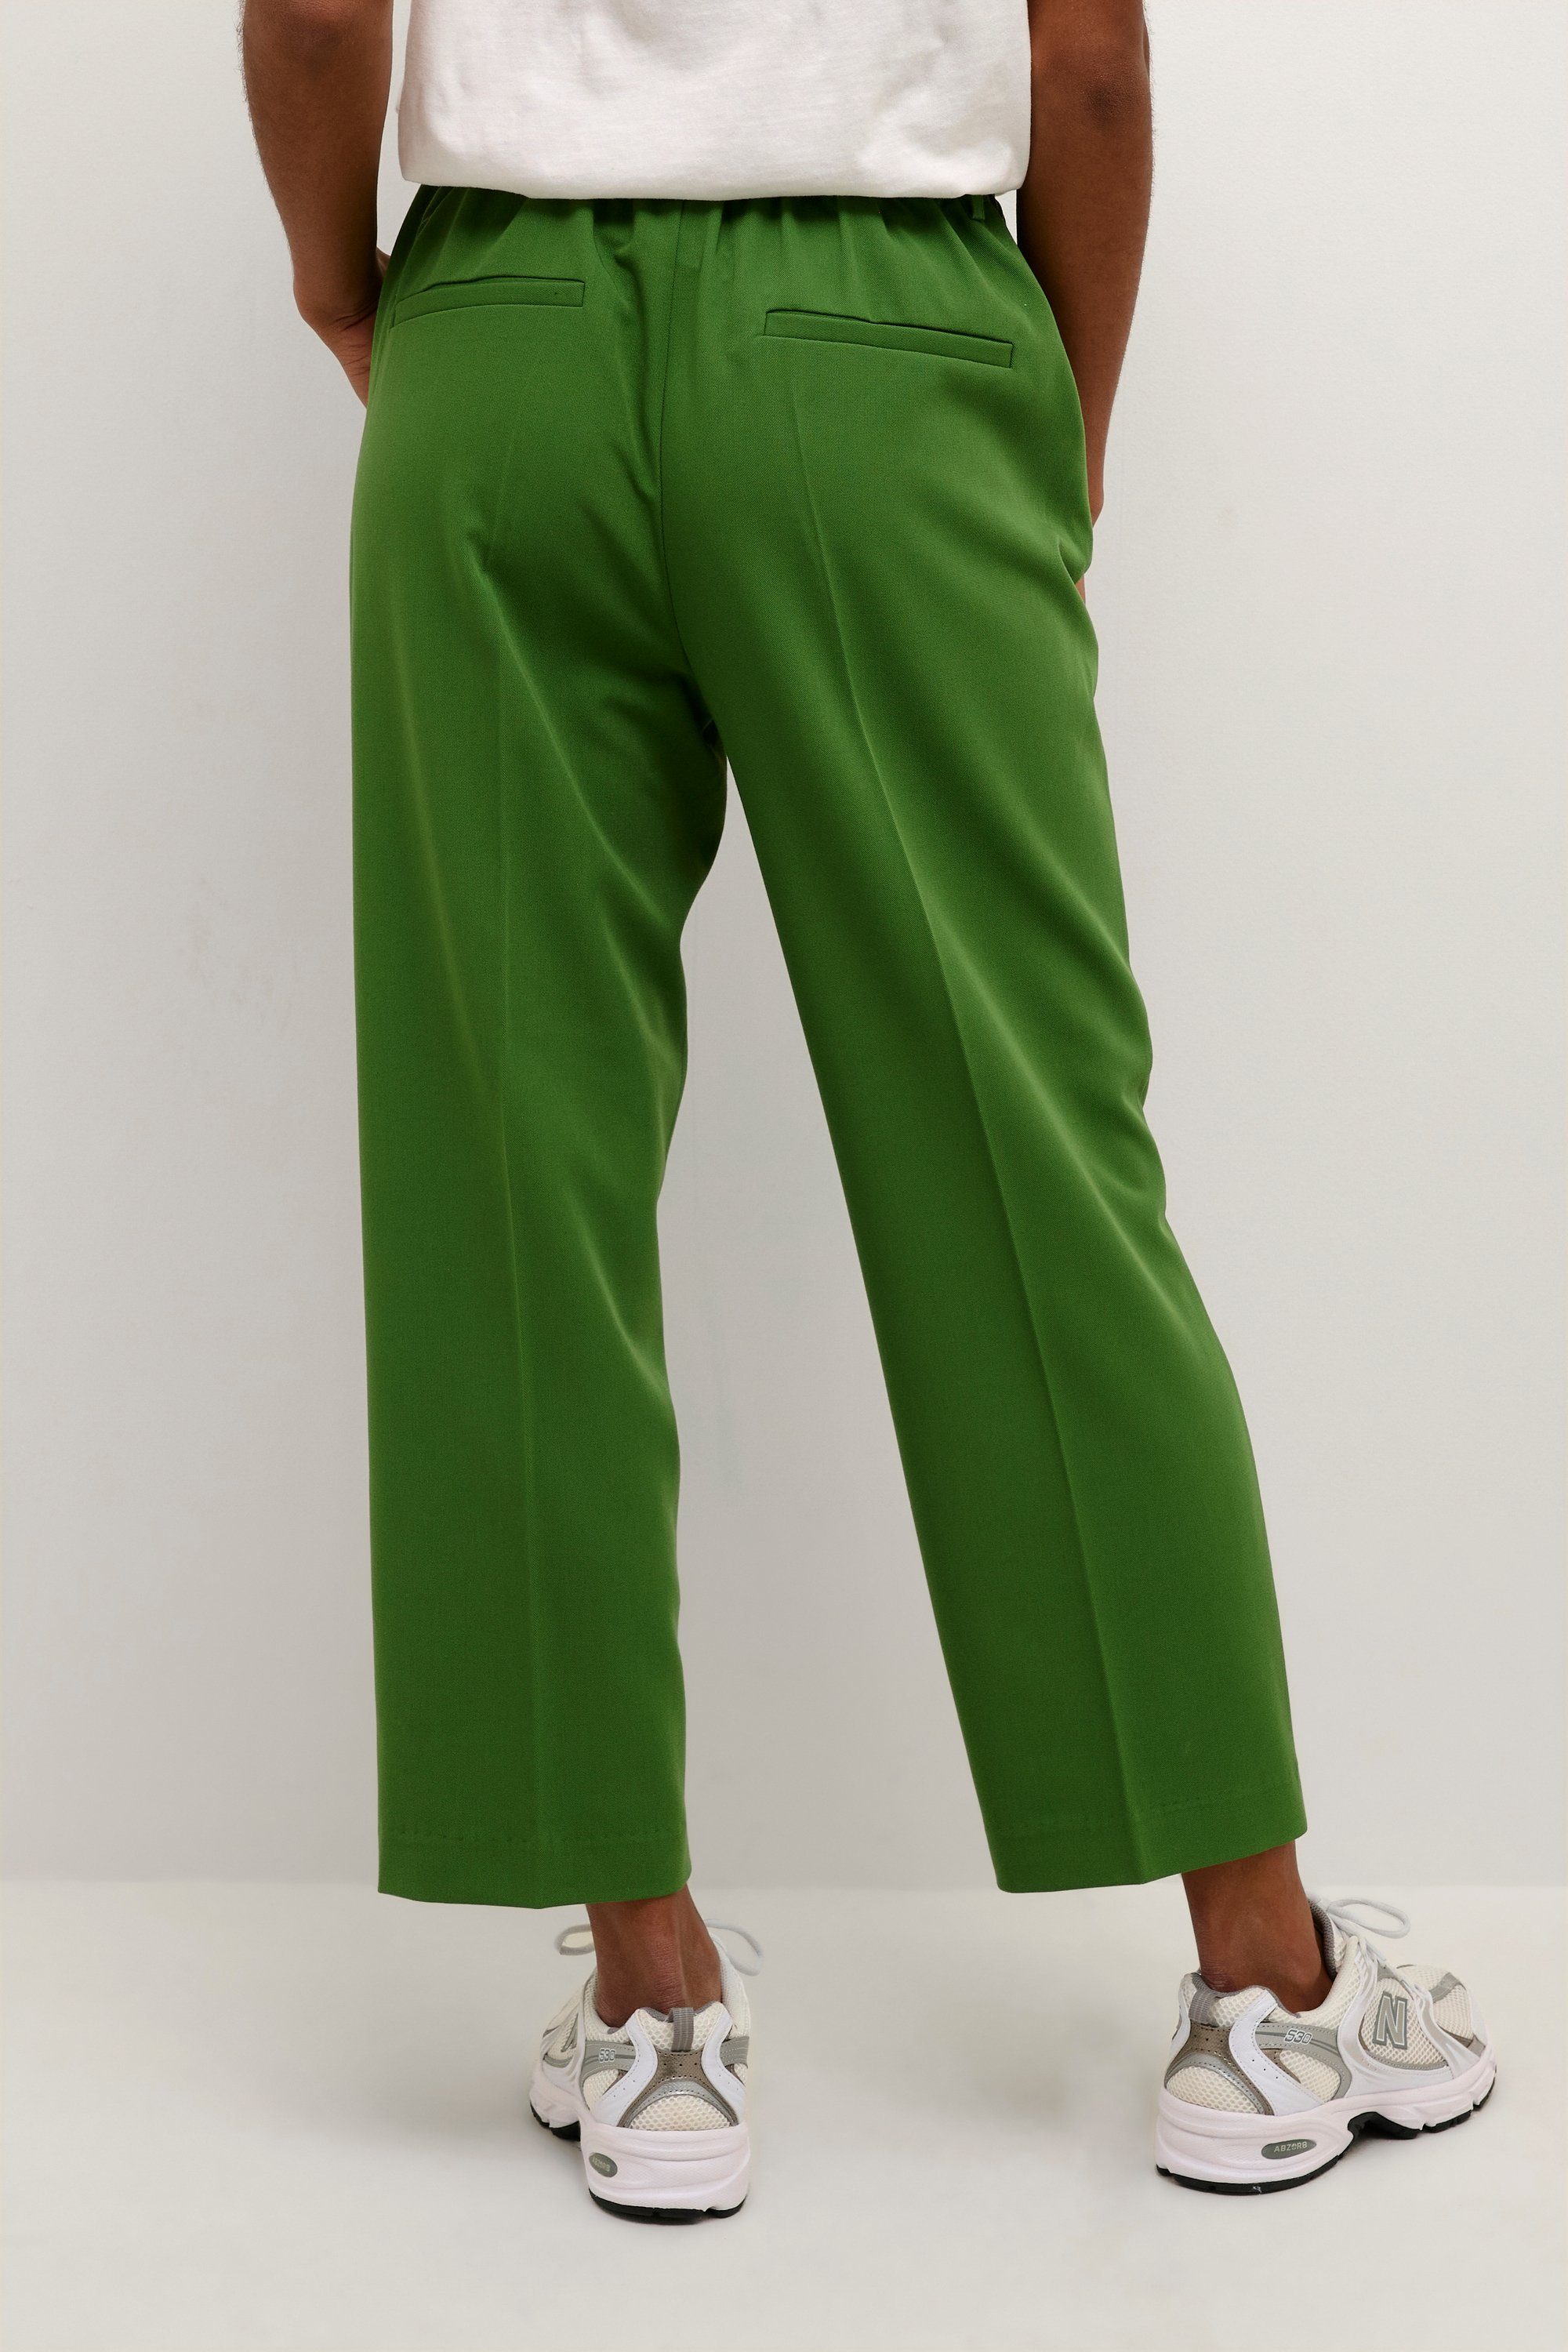 KAFFE Anzughose Pants Suiting Green Artichoke KAsakura